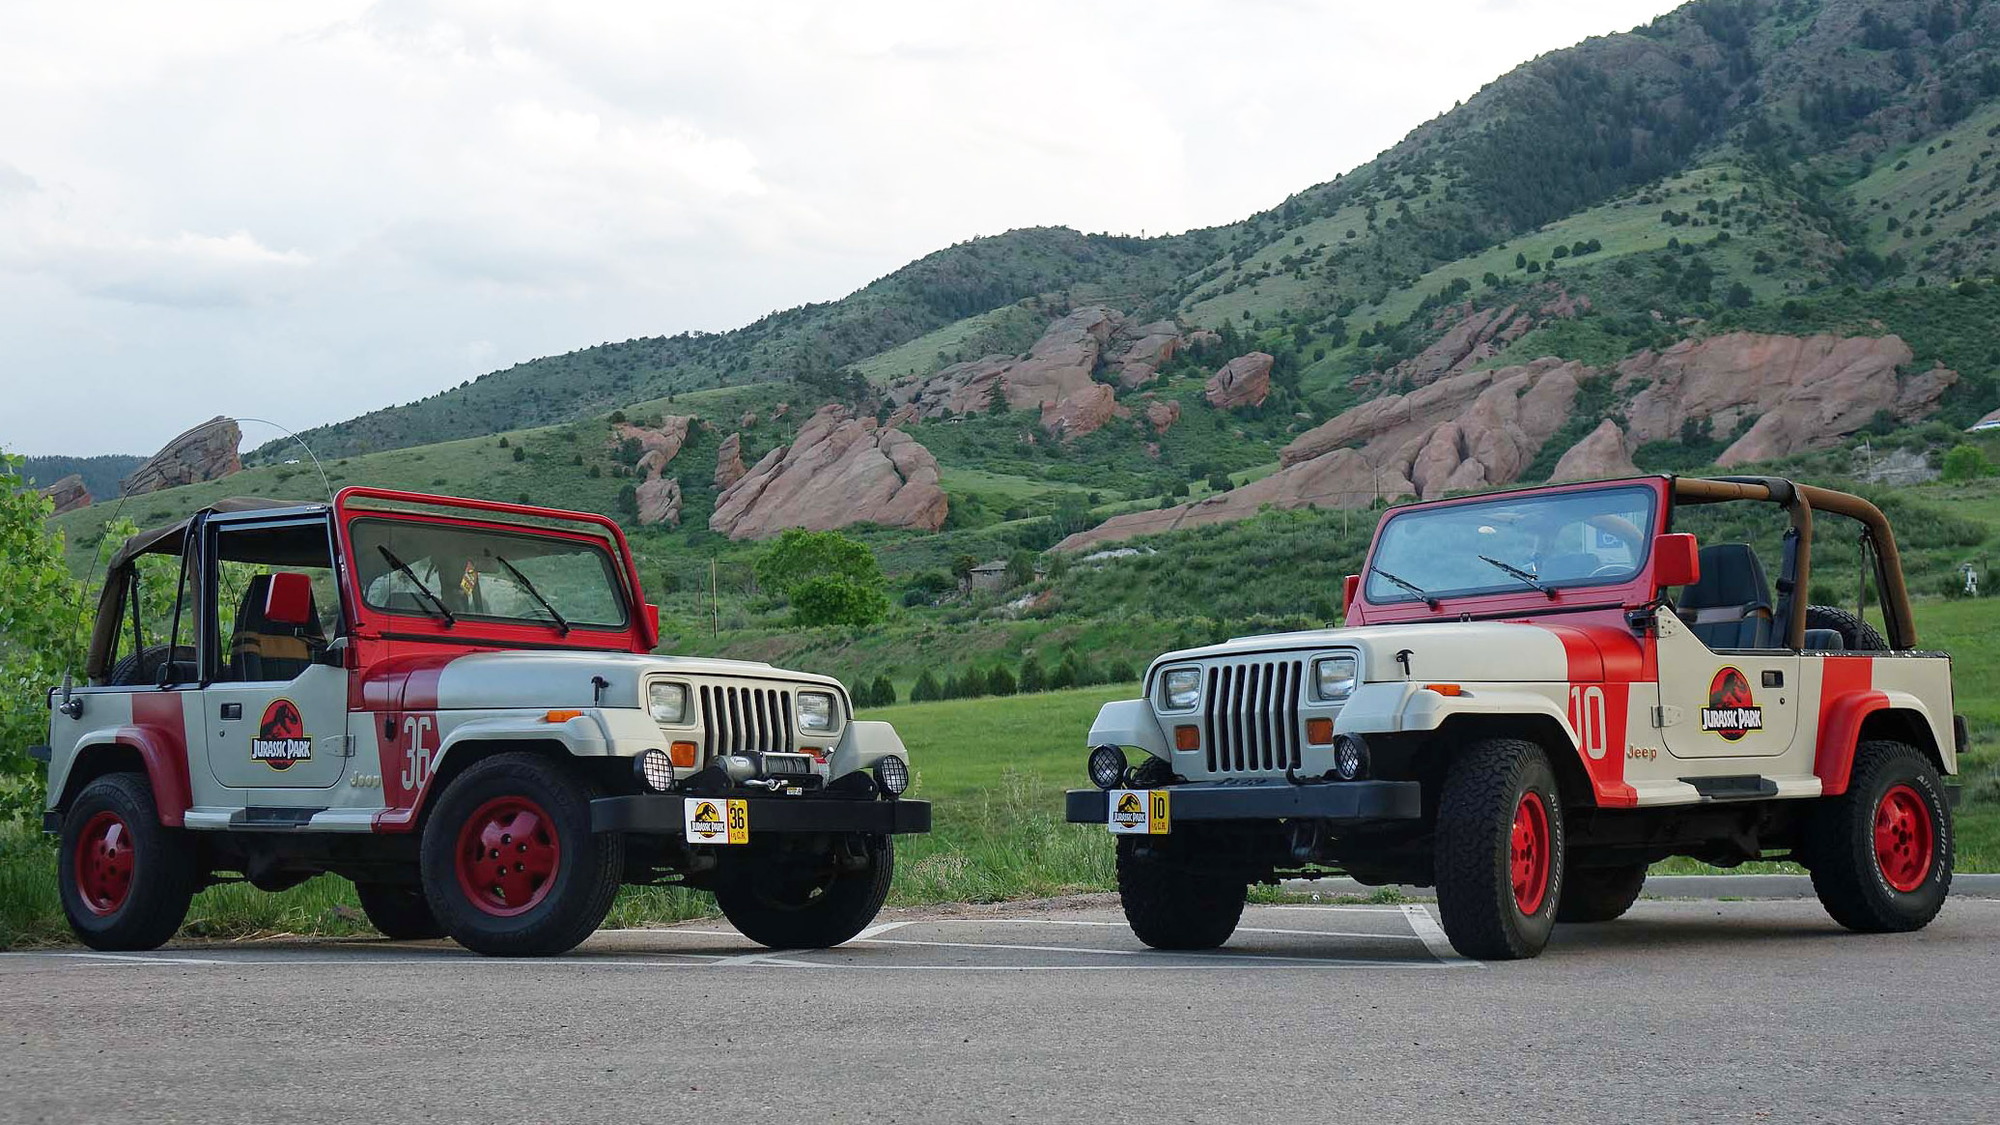 "Jurassic Park" Jeep Wranglers at Dinosaur Ridge, Morrison, Colorado